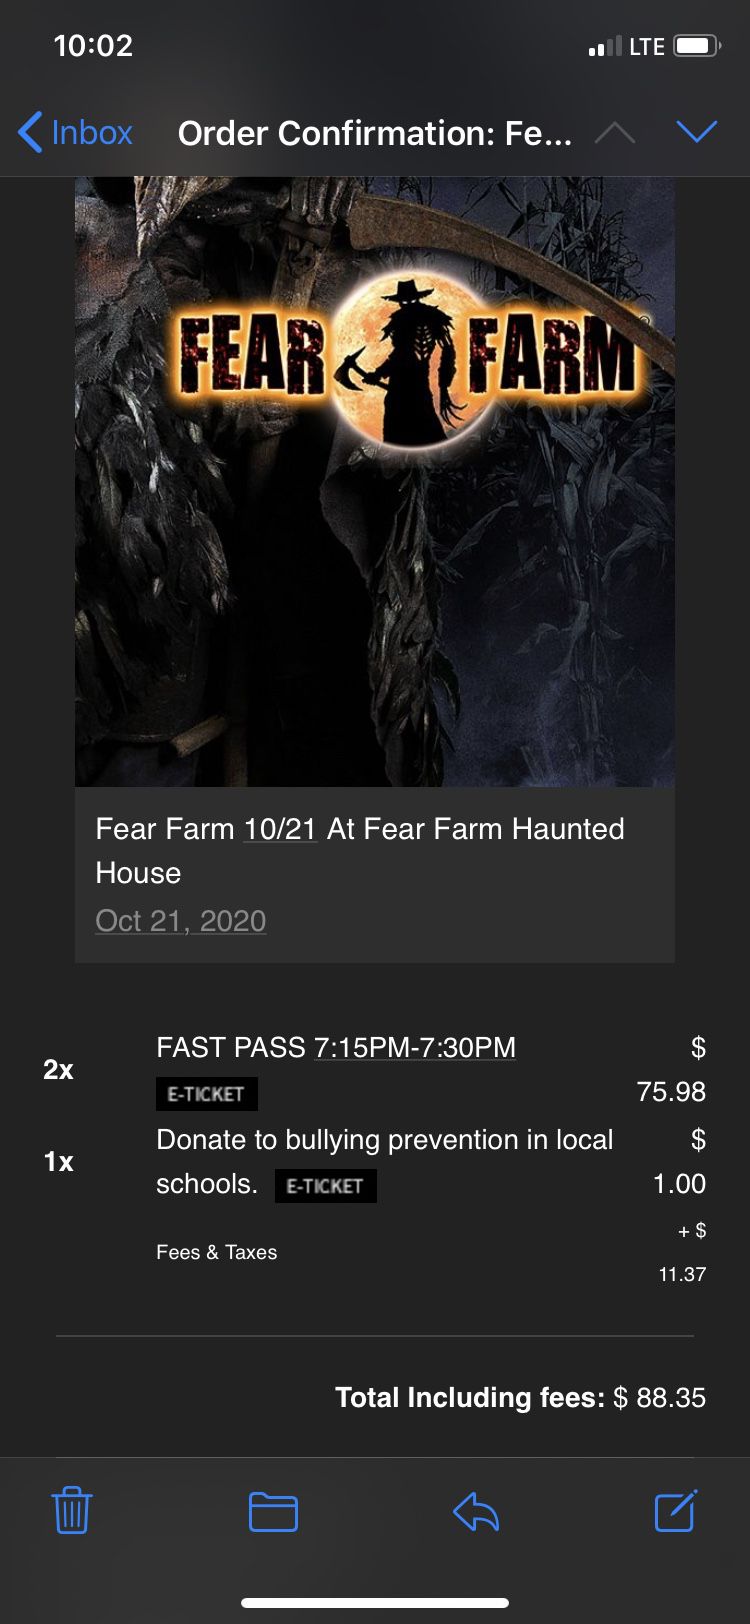 2Fear farm fast pass tickets